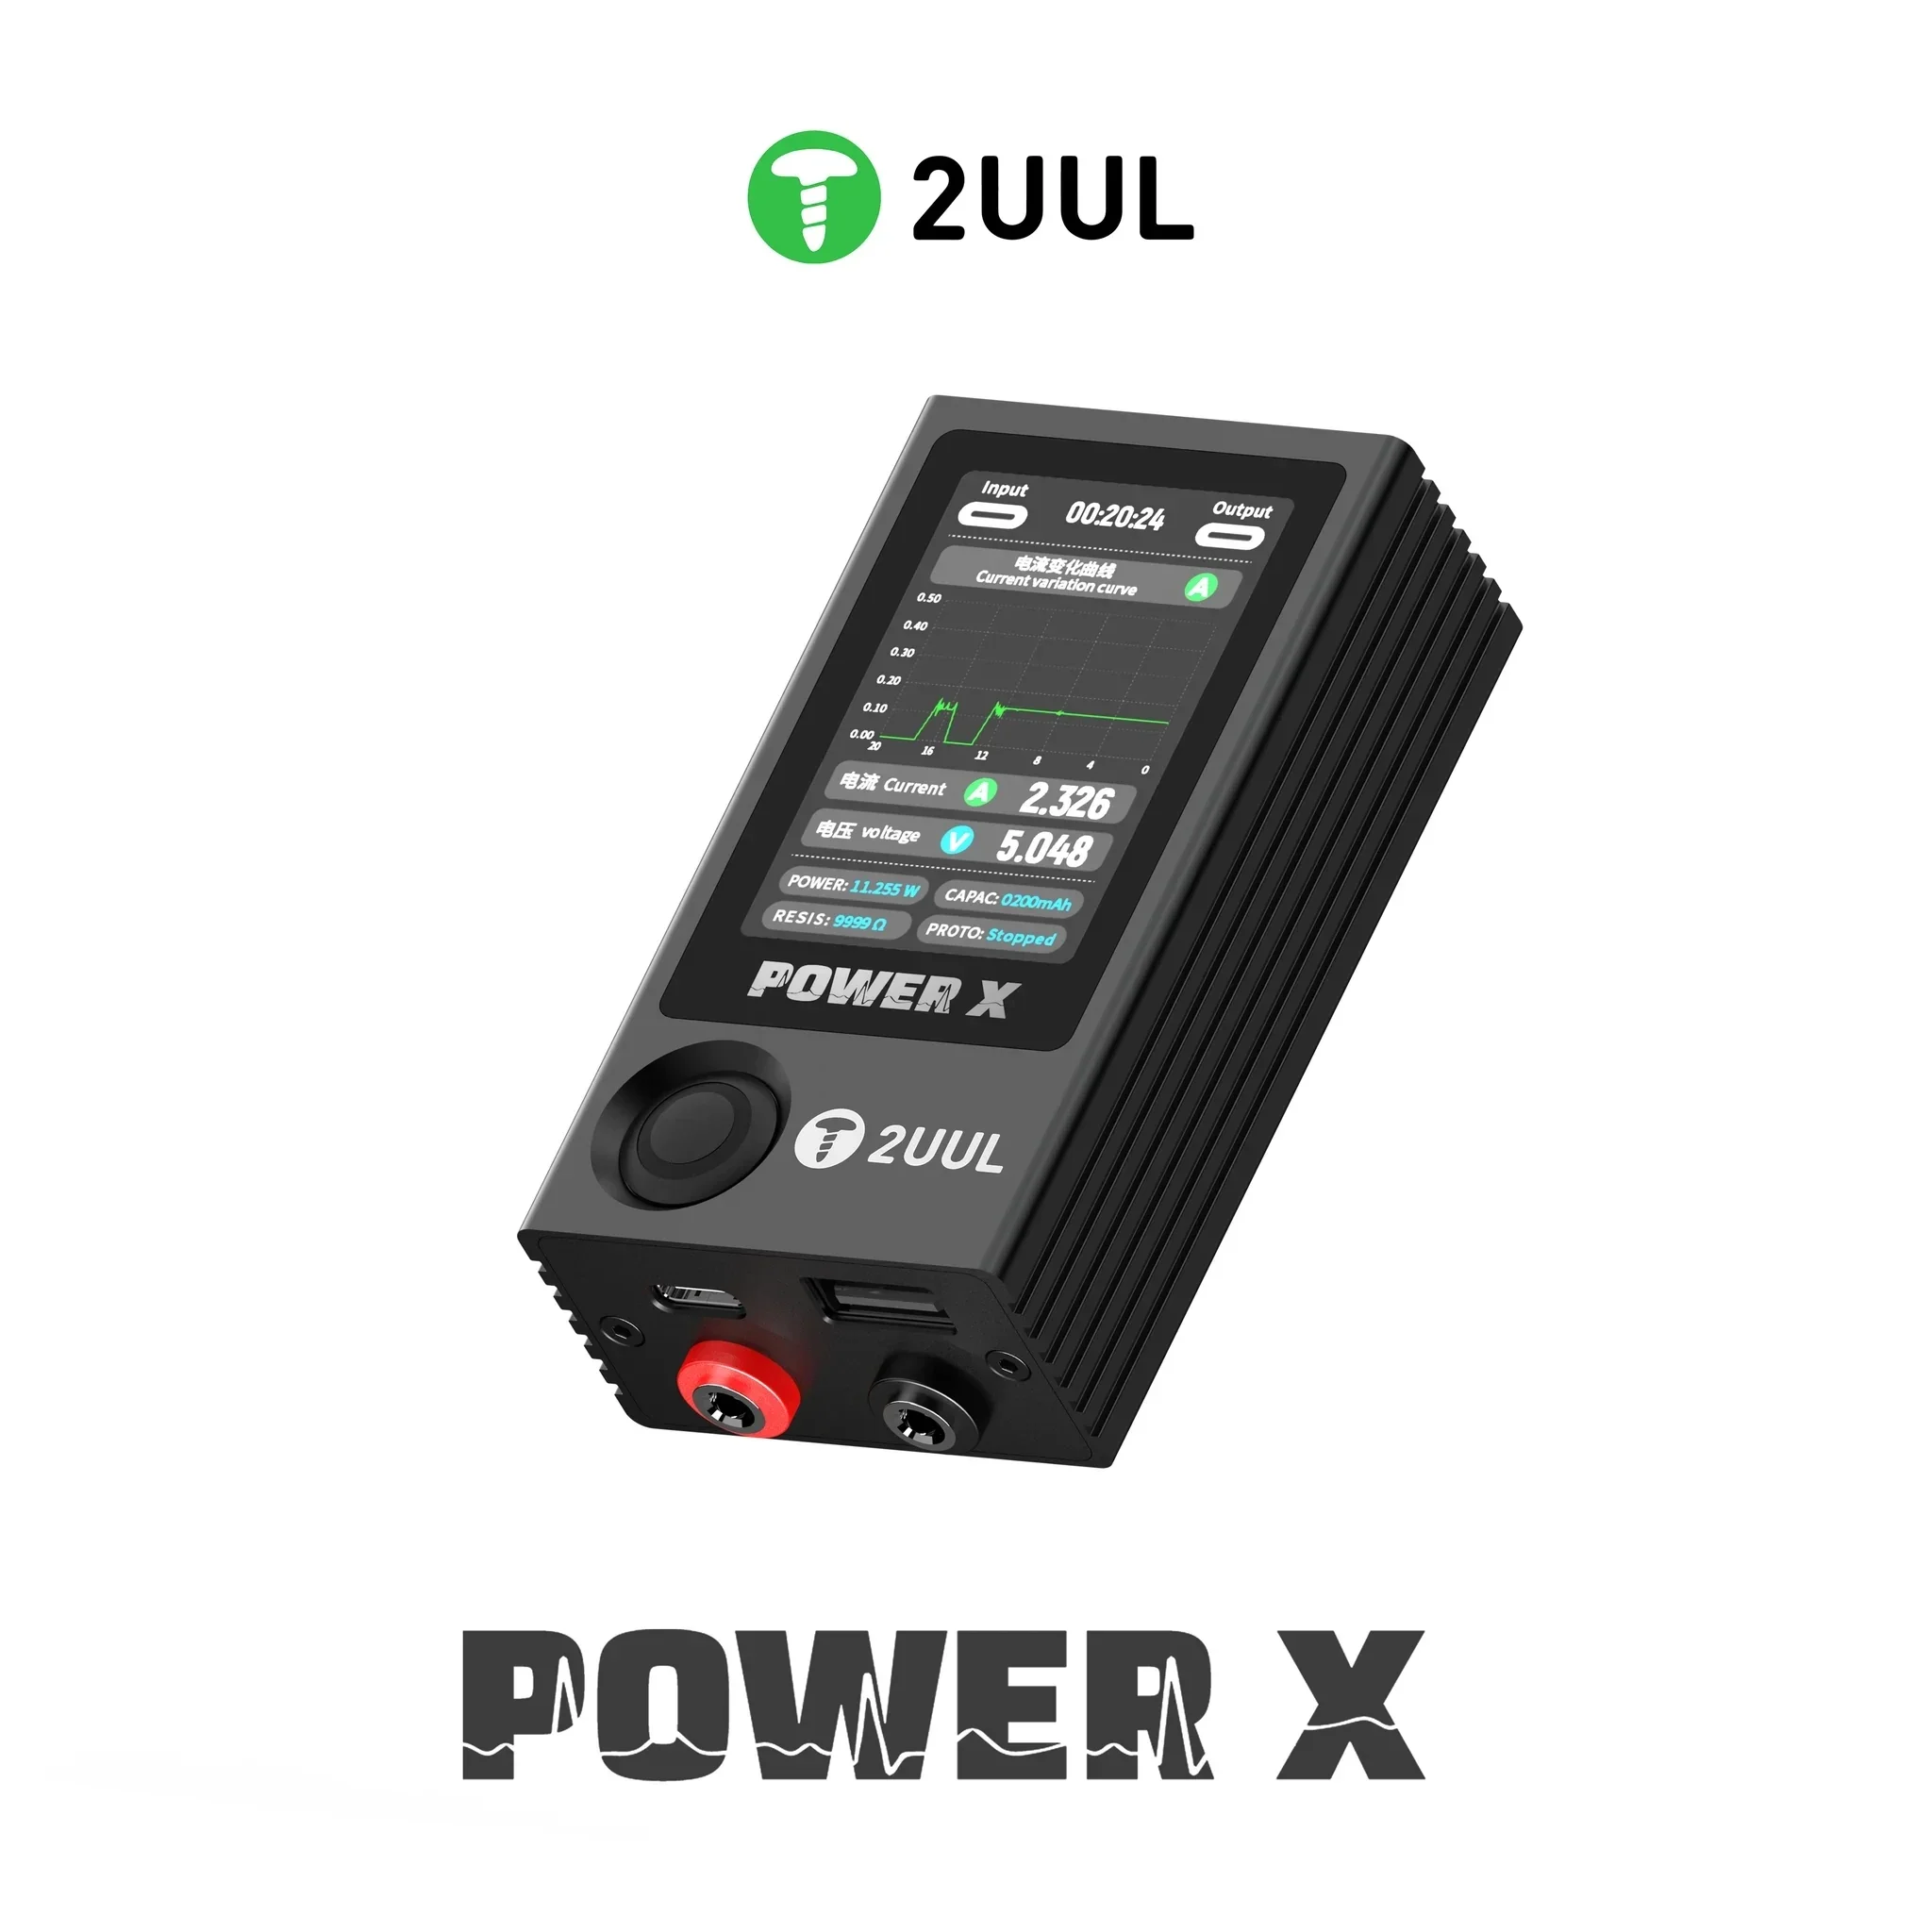 2uul-pw11-power-x-high-refresh-screen-ampere-voltage-meter-dissipacao-de-calor-integrado-telefone-movel-laptops-repair-tool